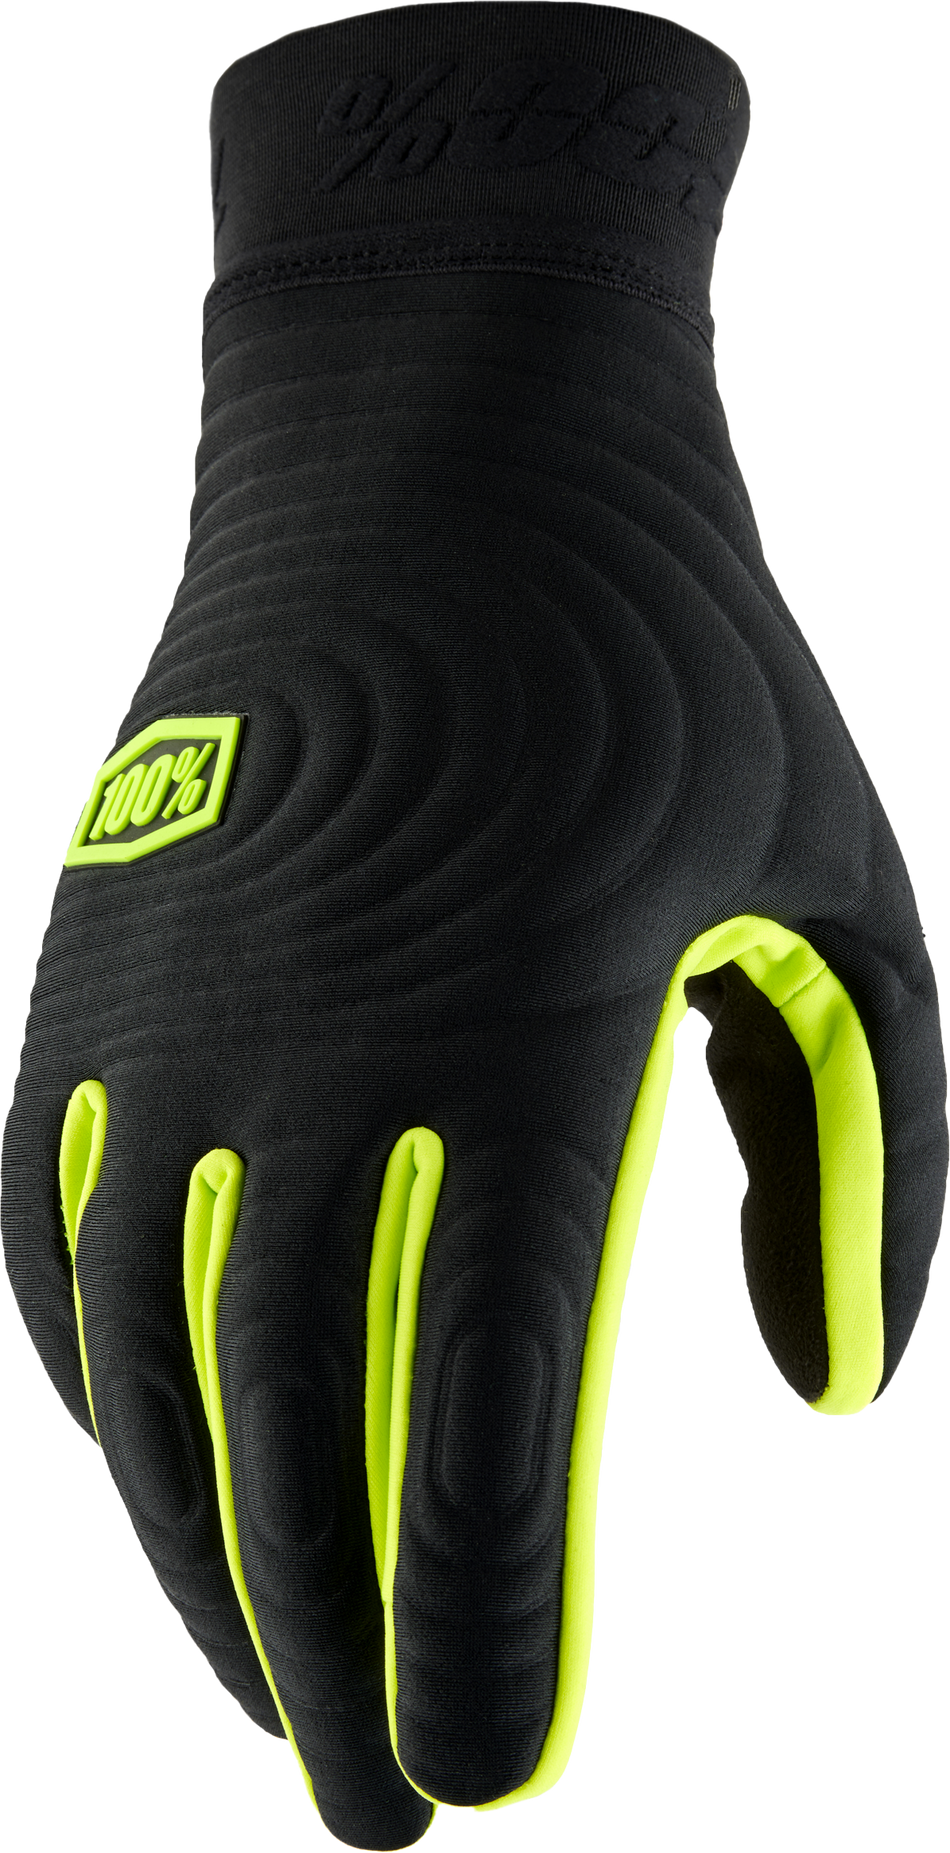 100% Brisker Xtreme Gloves Black/Fluo Ellow Lg 10030-00003